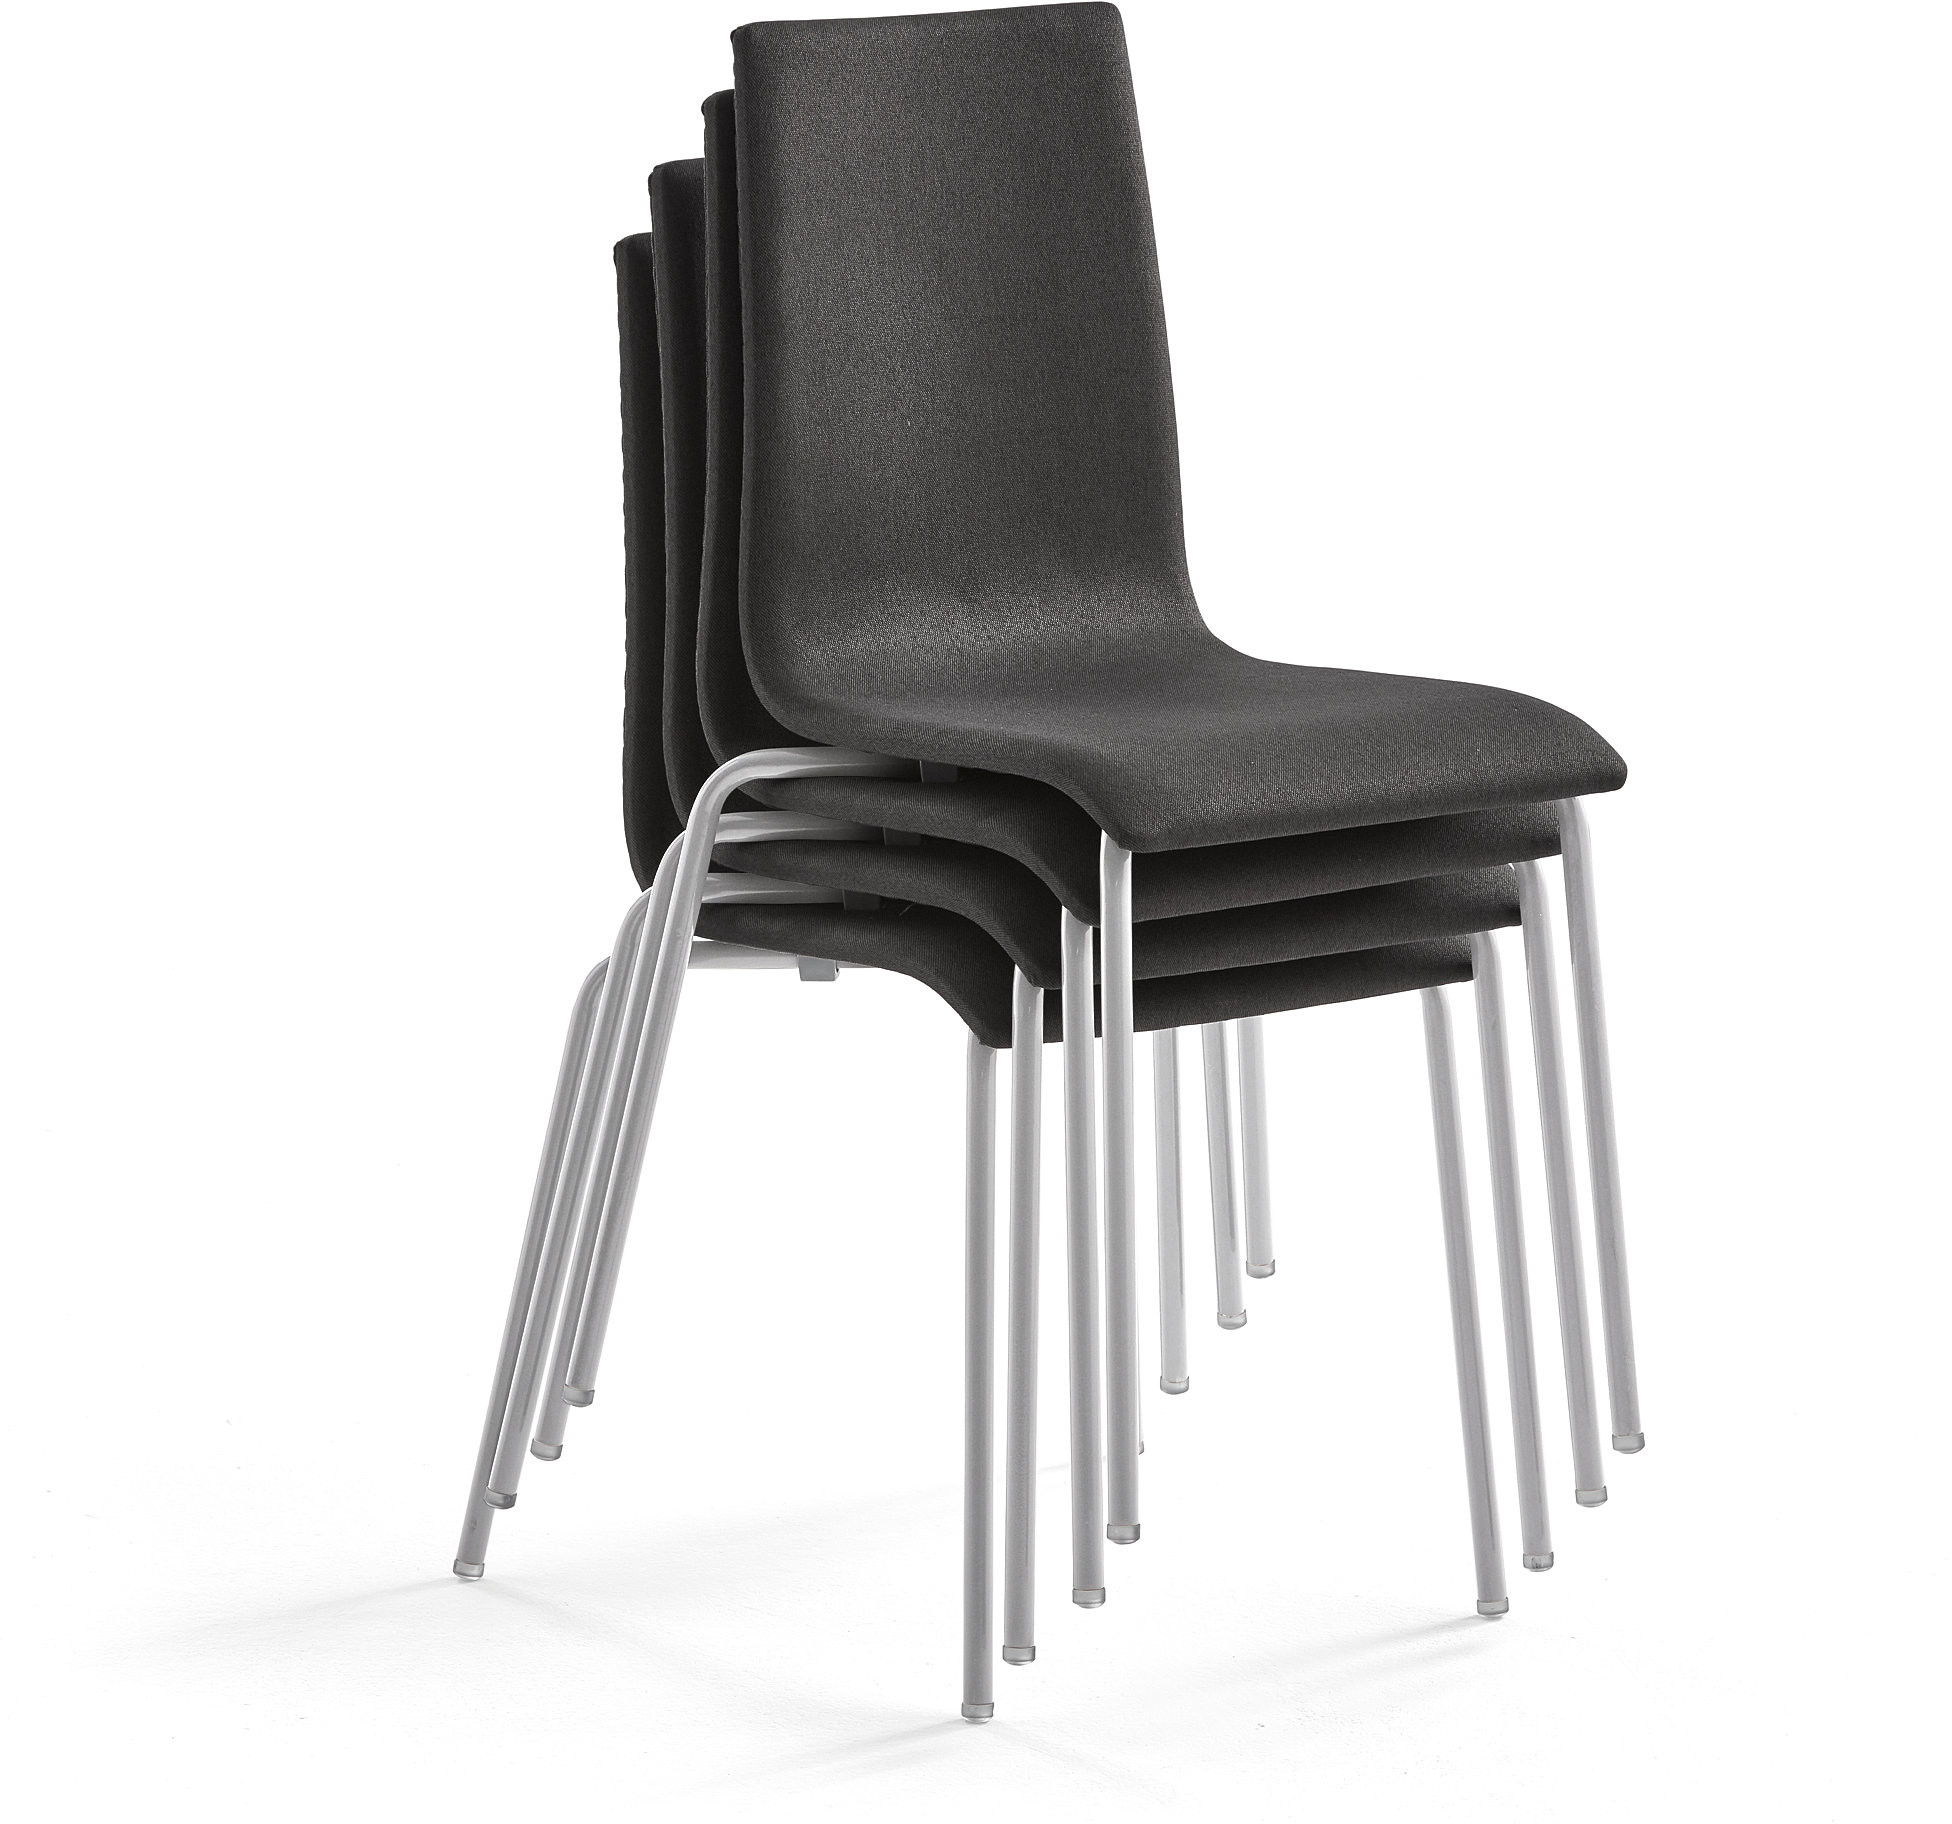 AJ Produkty Krzesło konferencyjne MELVILLE 4 szt., ciemnoszary, aluminium